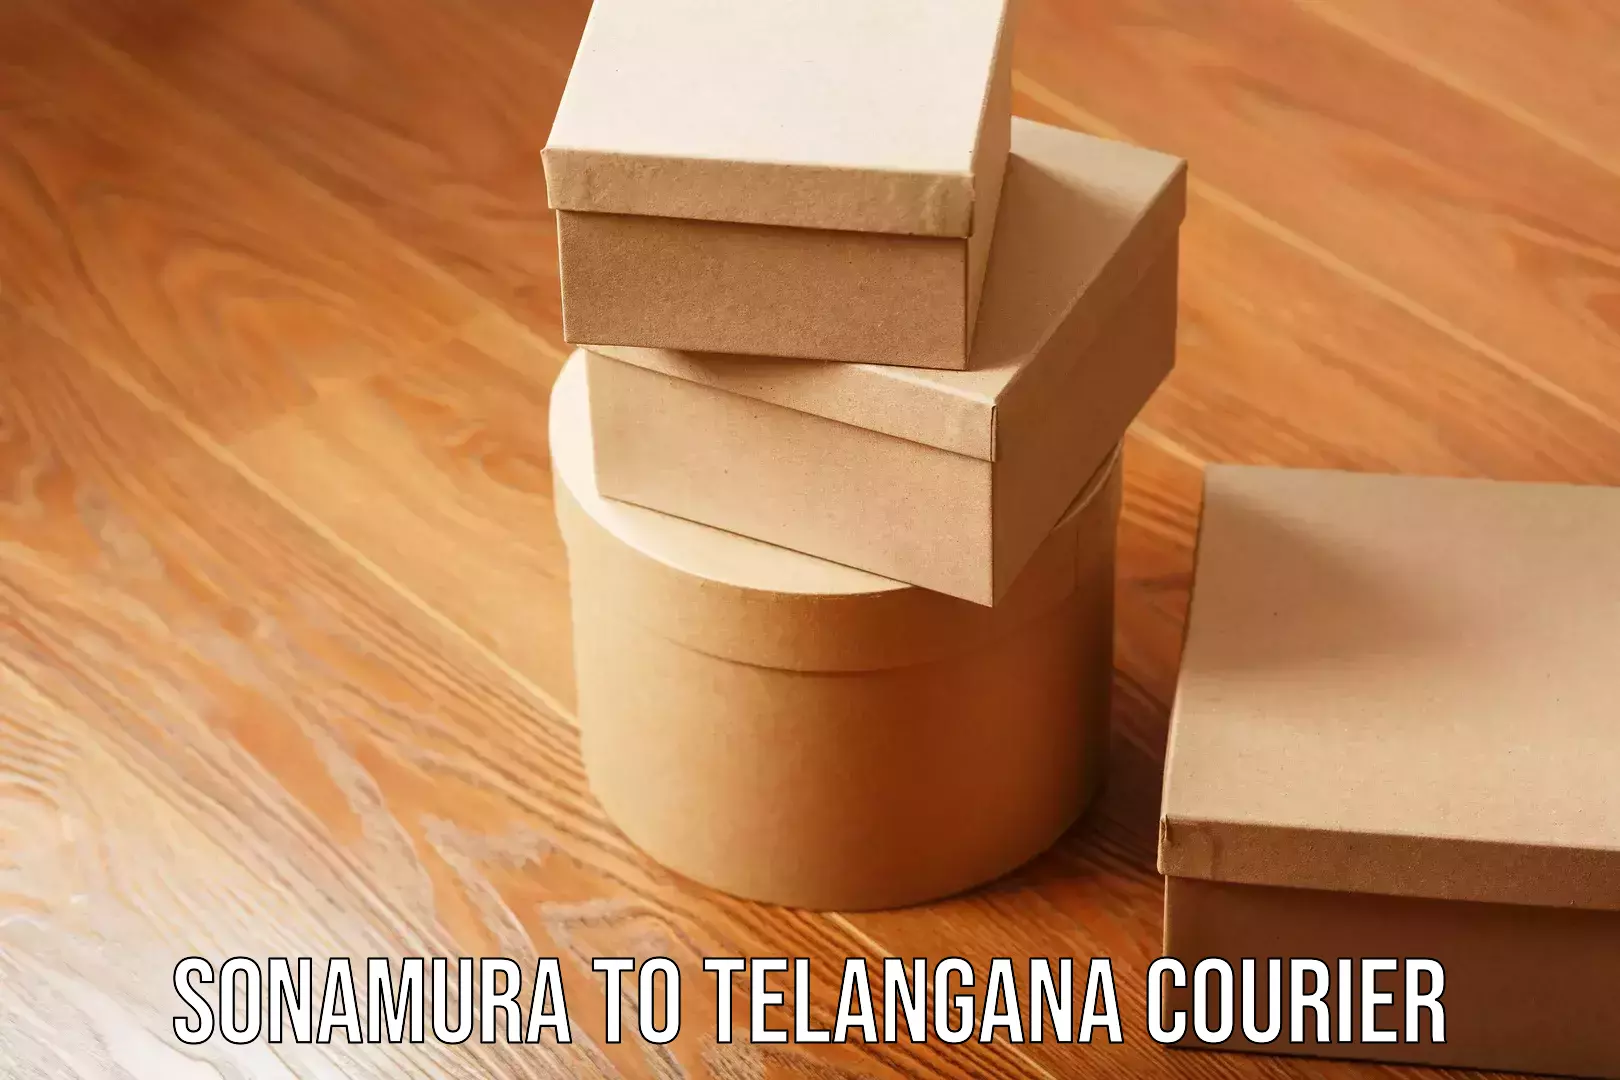 User-friendly courier app Sonamura to Telangana